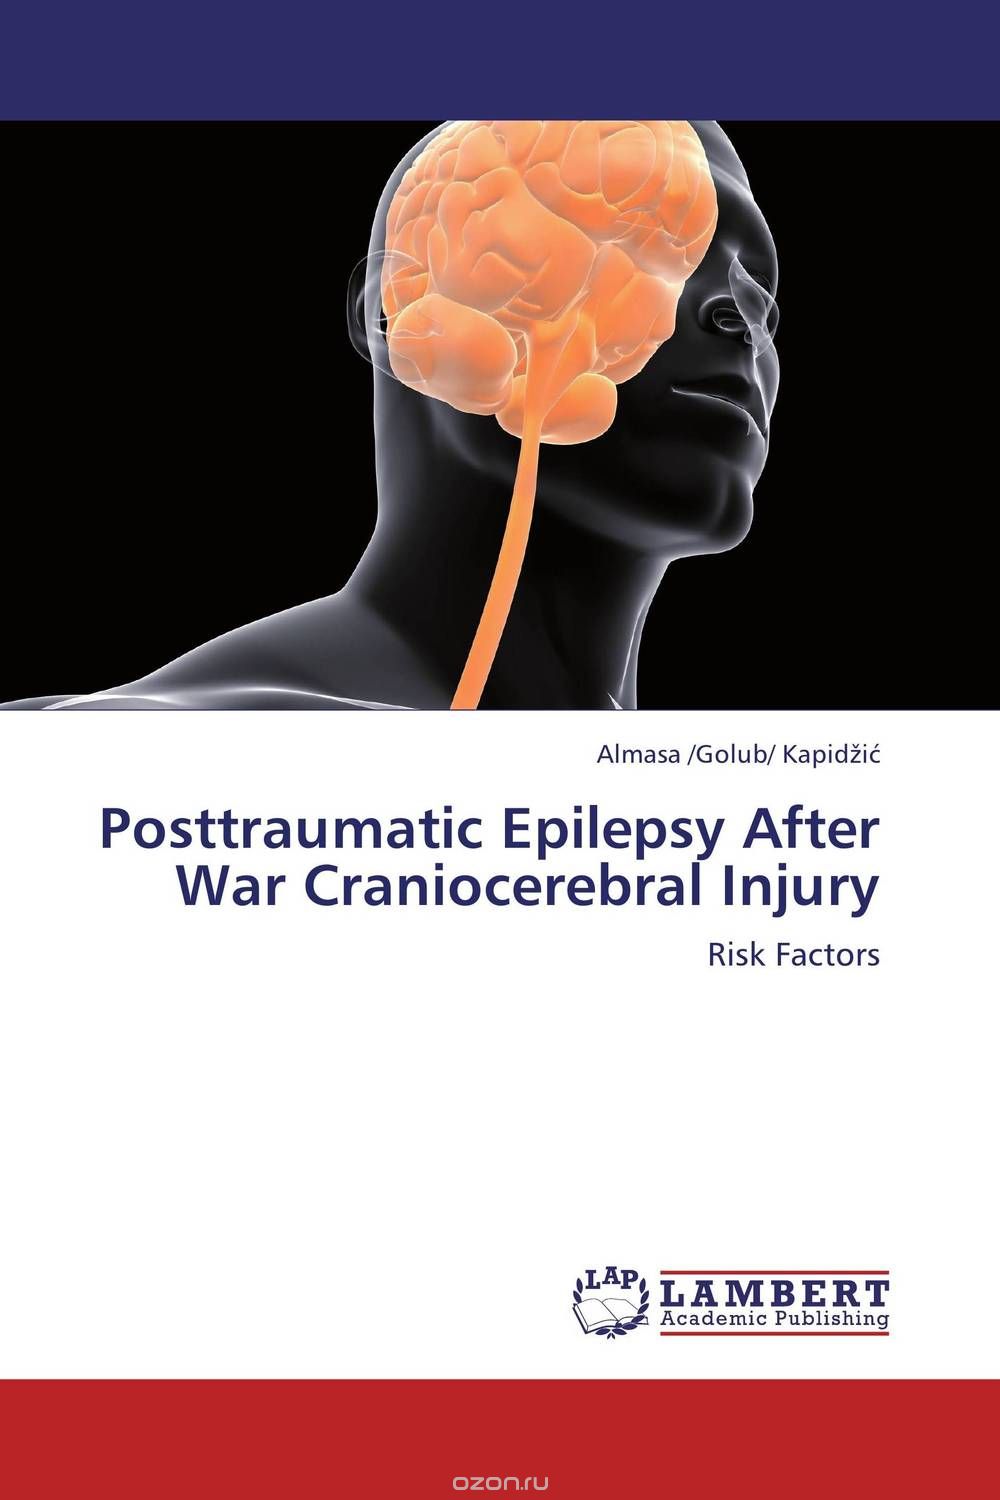 Posttraumatic Epilepsy After War Craniocerebral Injury